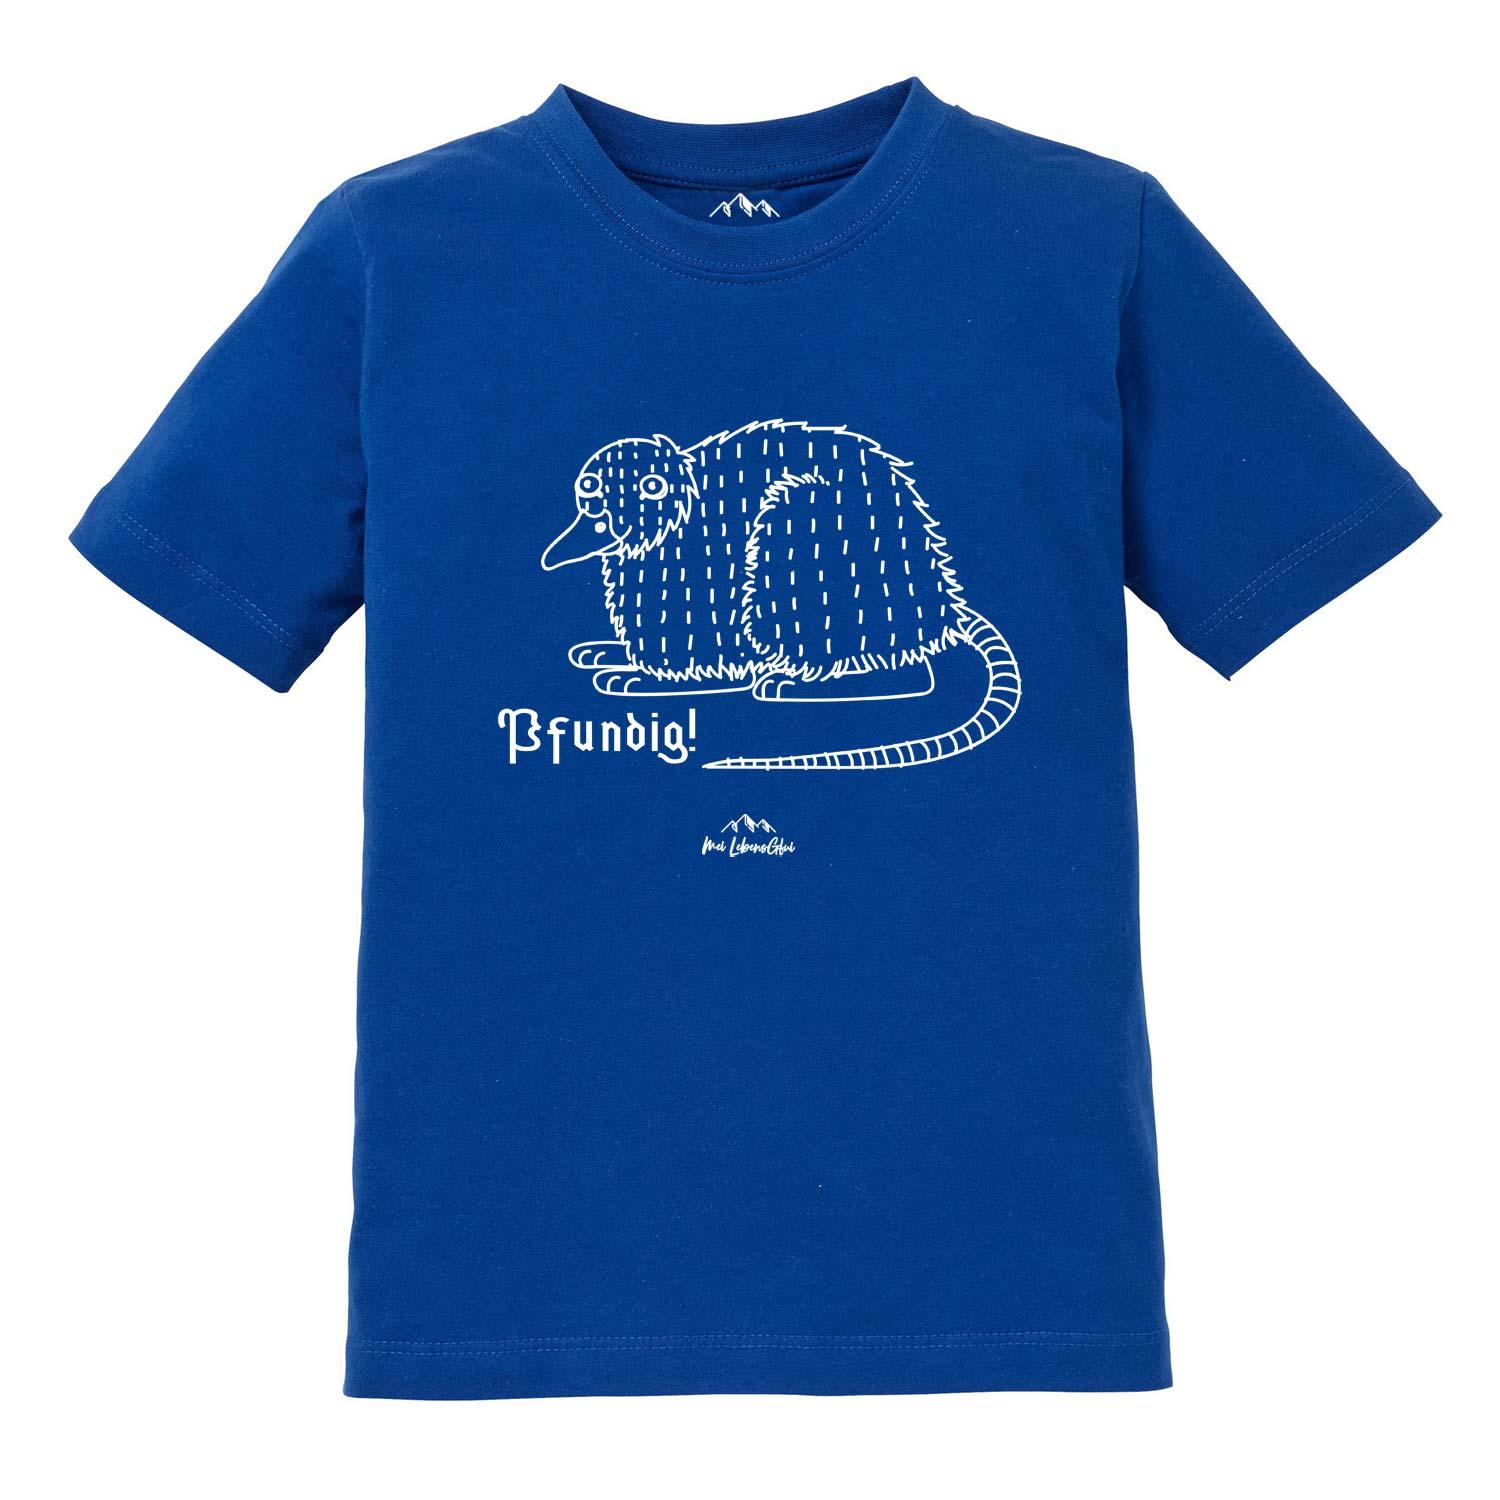 Kinder T-Shirt Wolpertinger "Pfundig" - bavariashop - mei LebensGfui